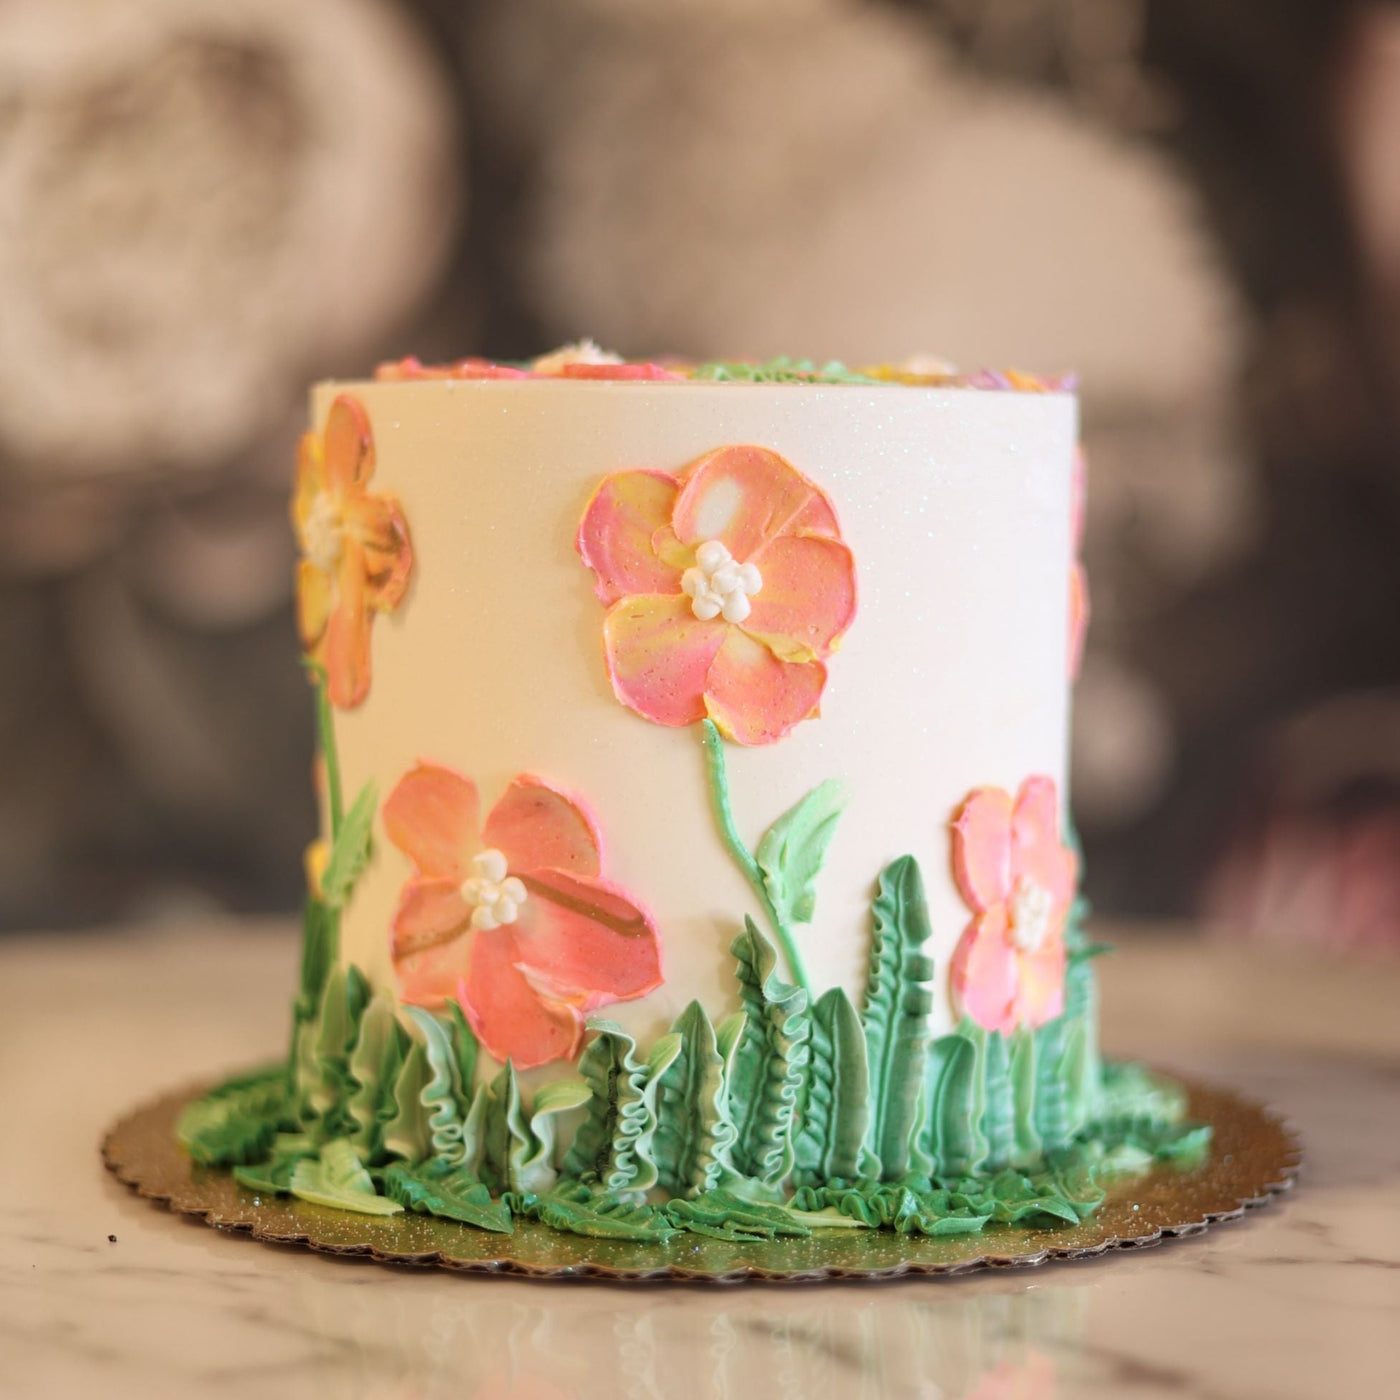 fun cake, pretty girl cake, lovely cake, fun bakery, so cute